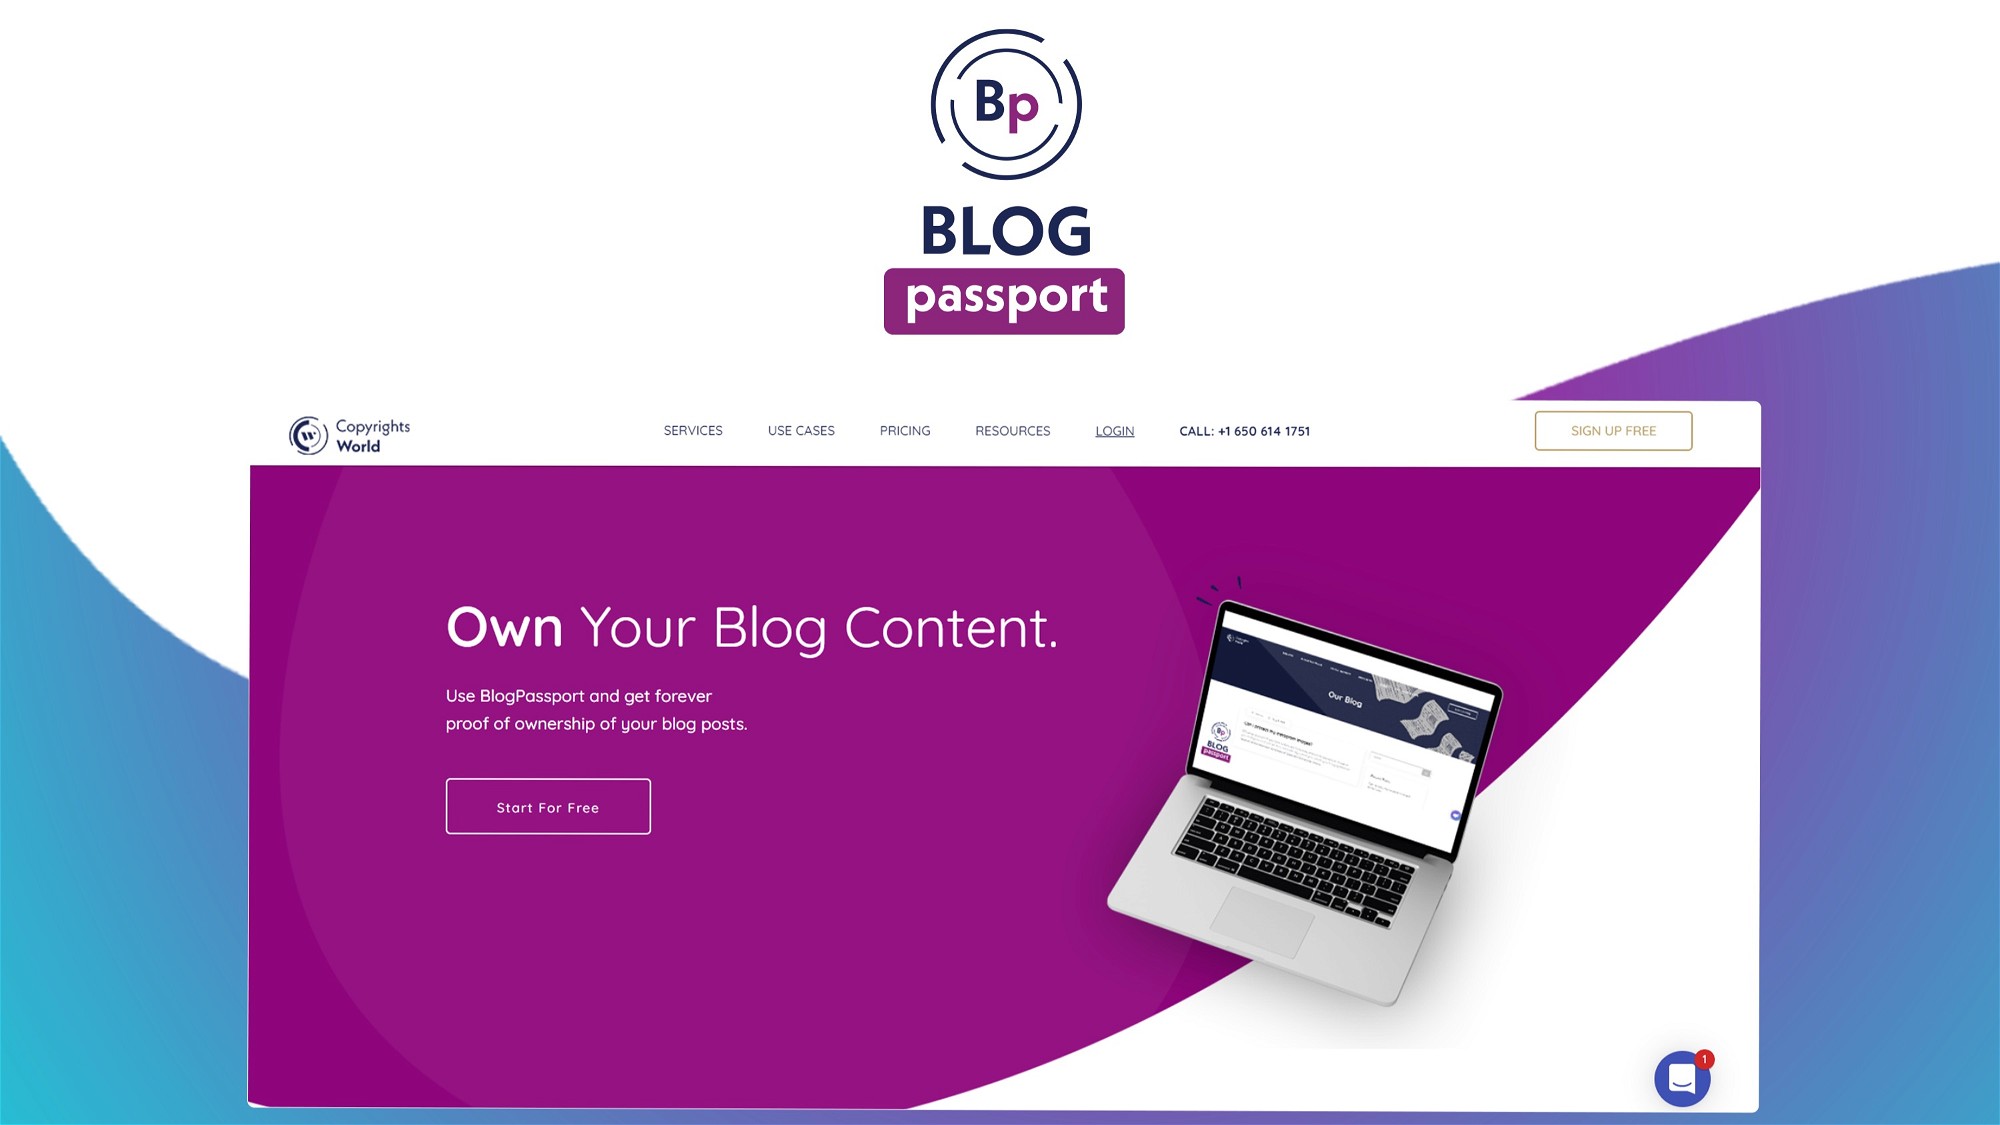 BlogPassport for WordPress